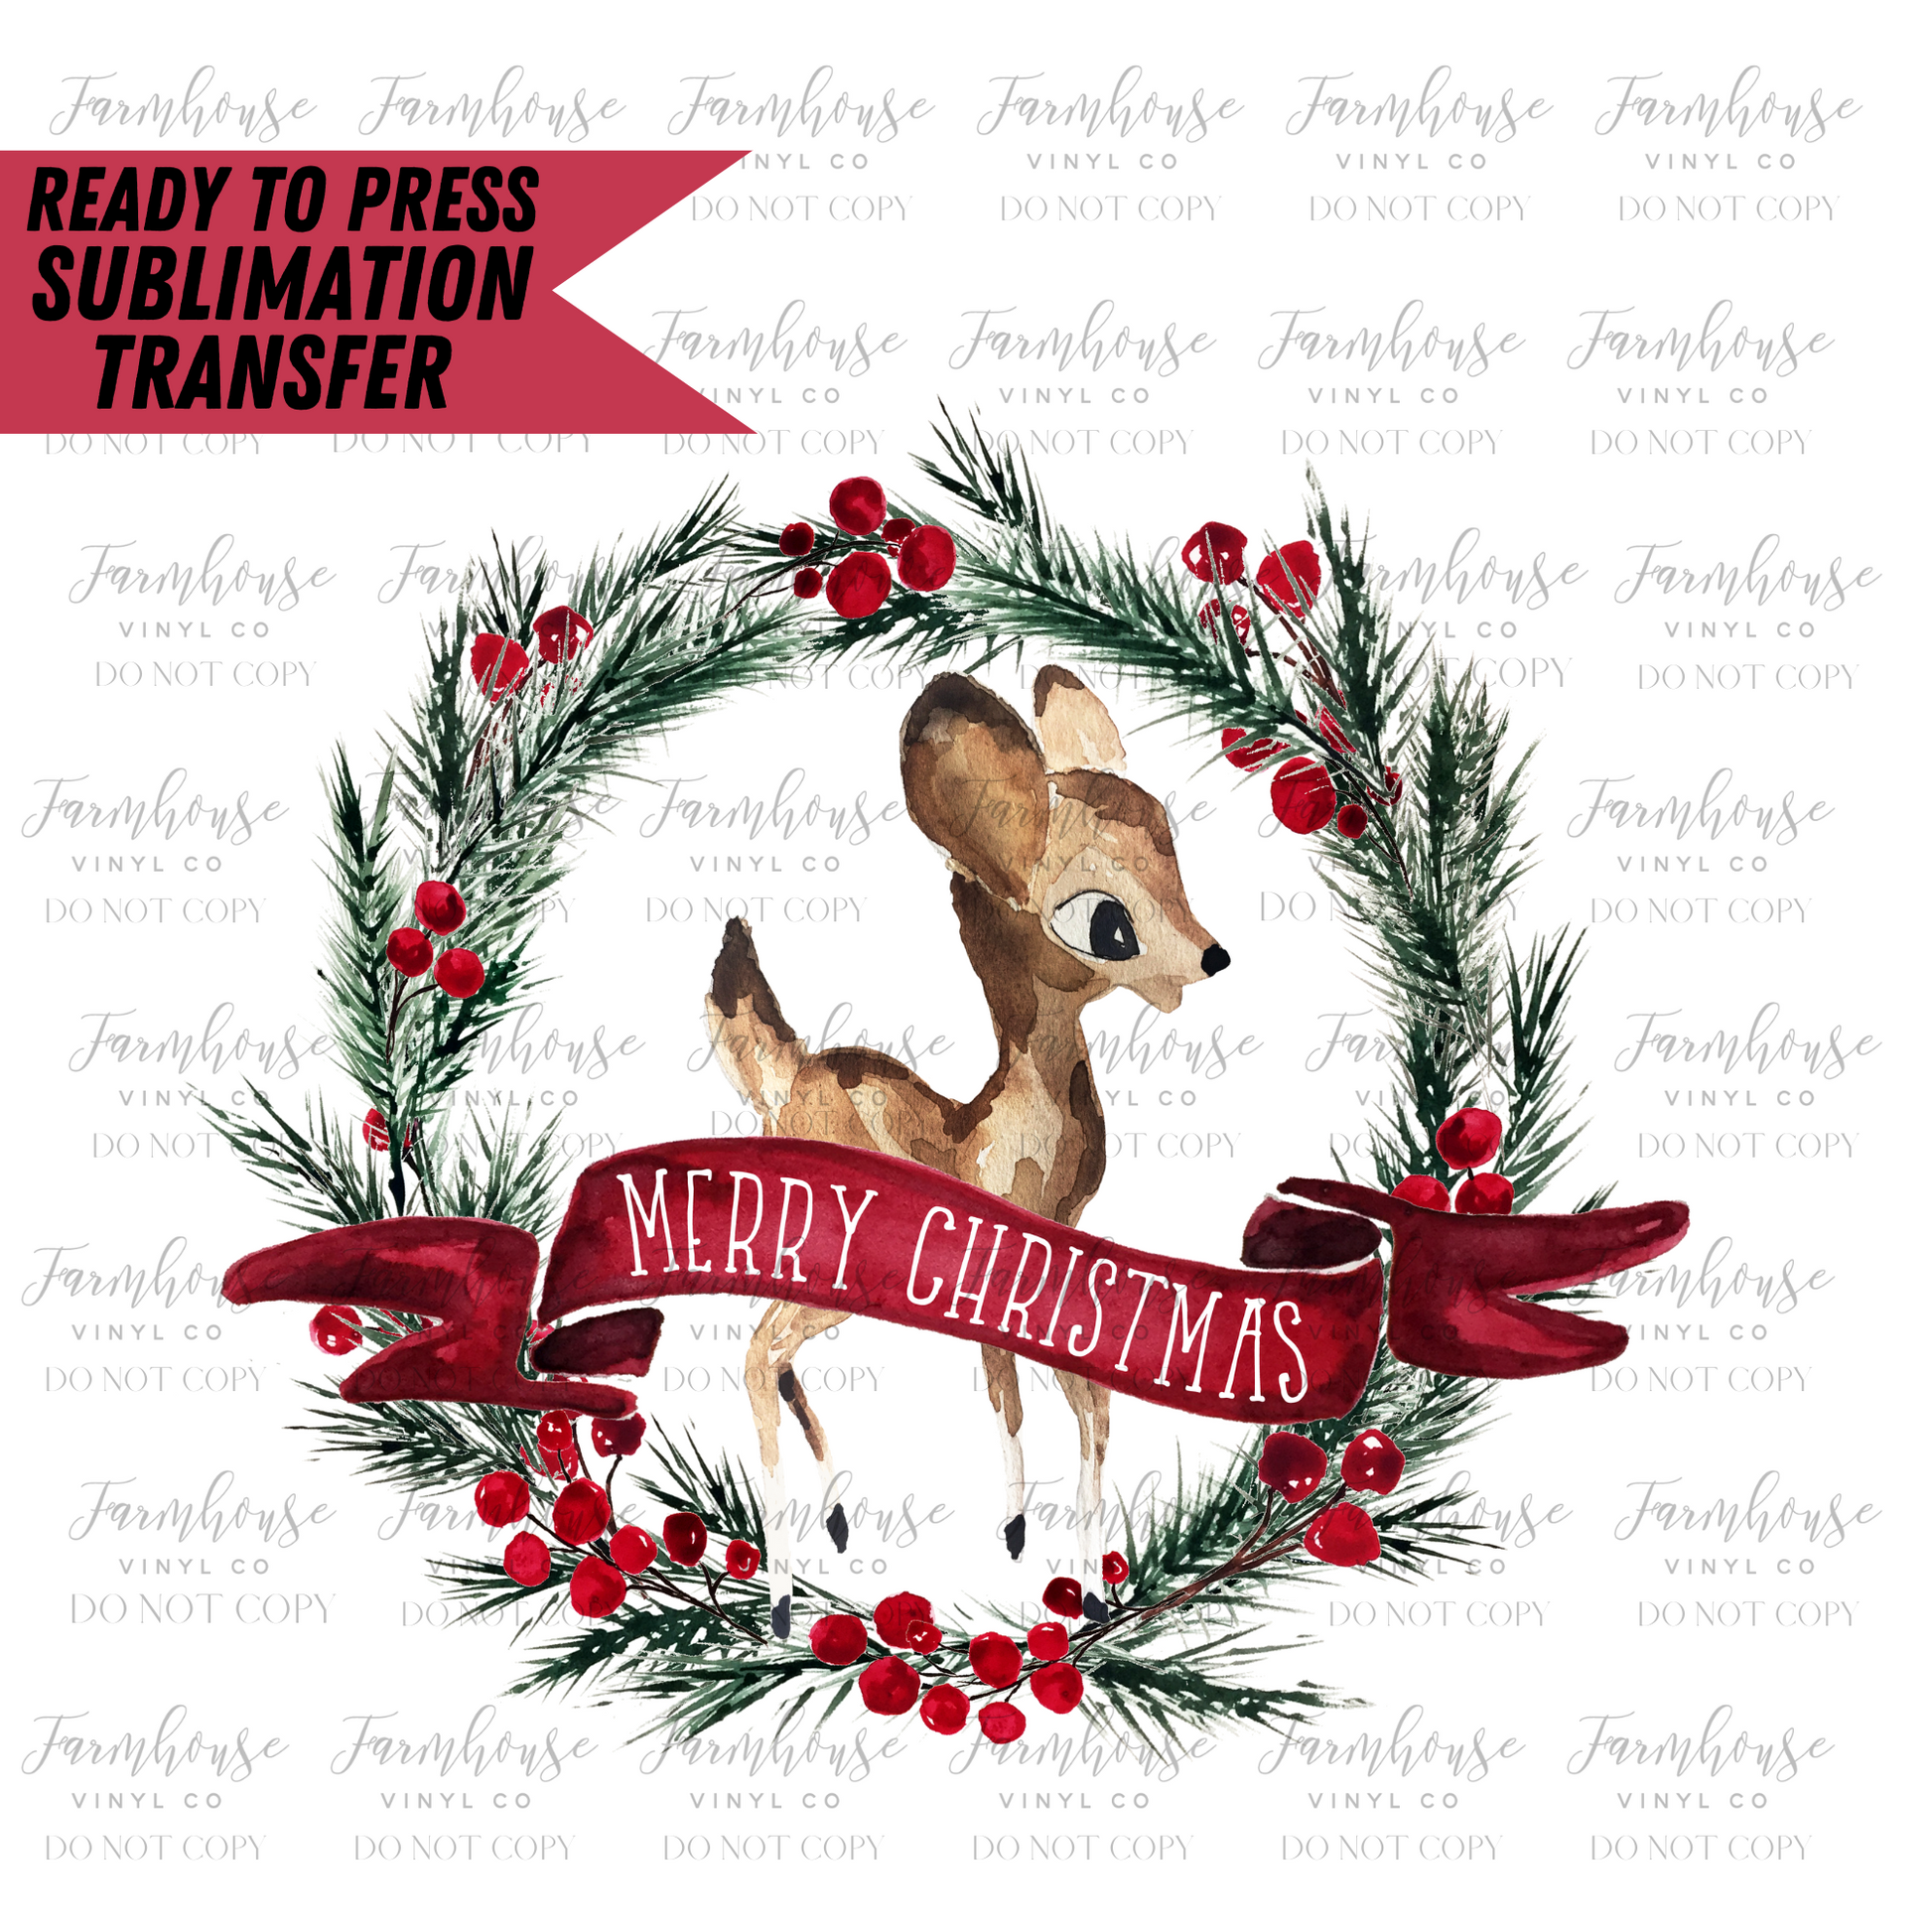 Merry Christmas Vintage Reindeer Ready To Press Sublimation Transfer - Farmhouse Vinyl Co